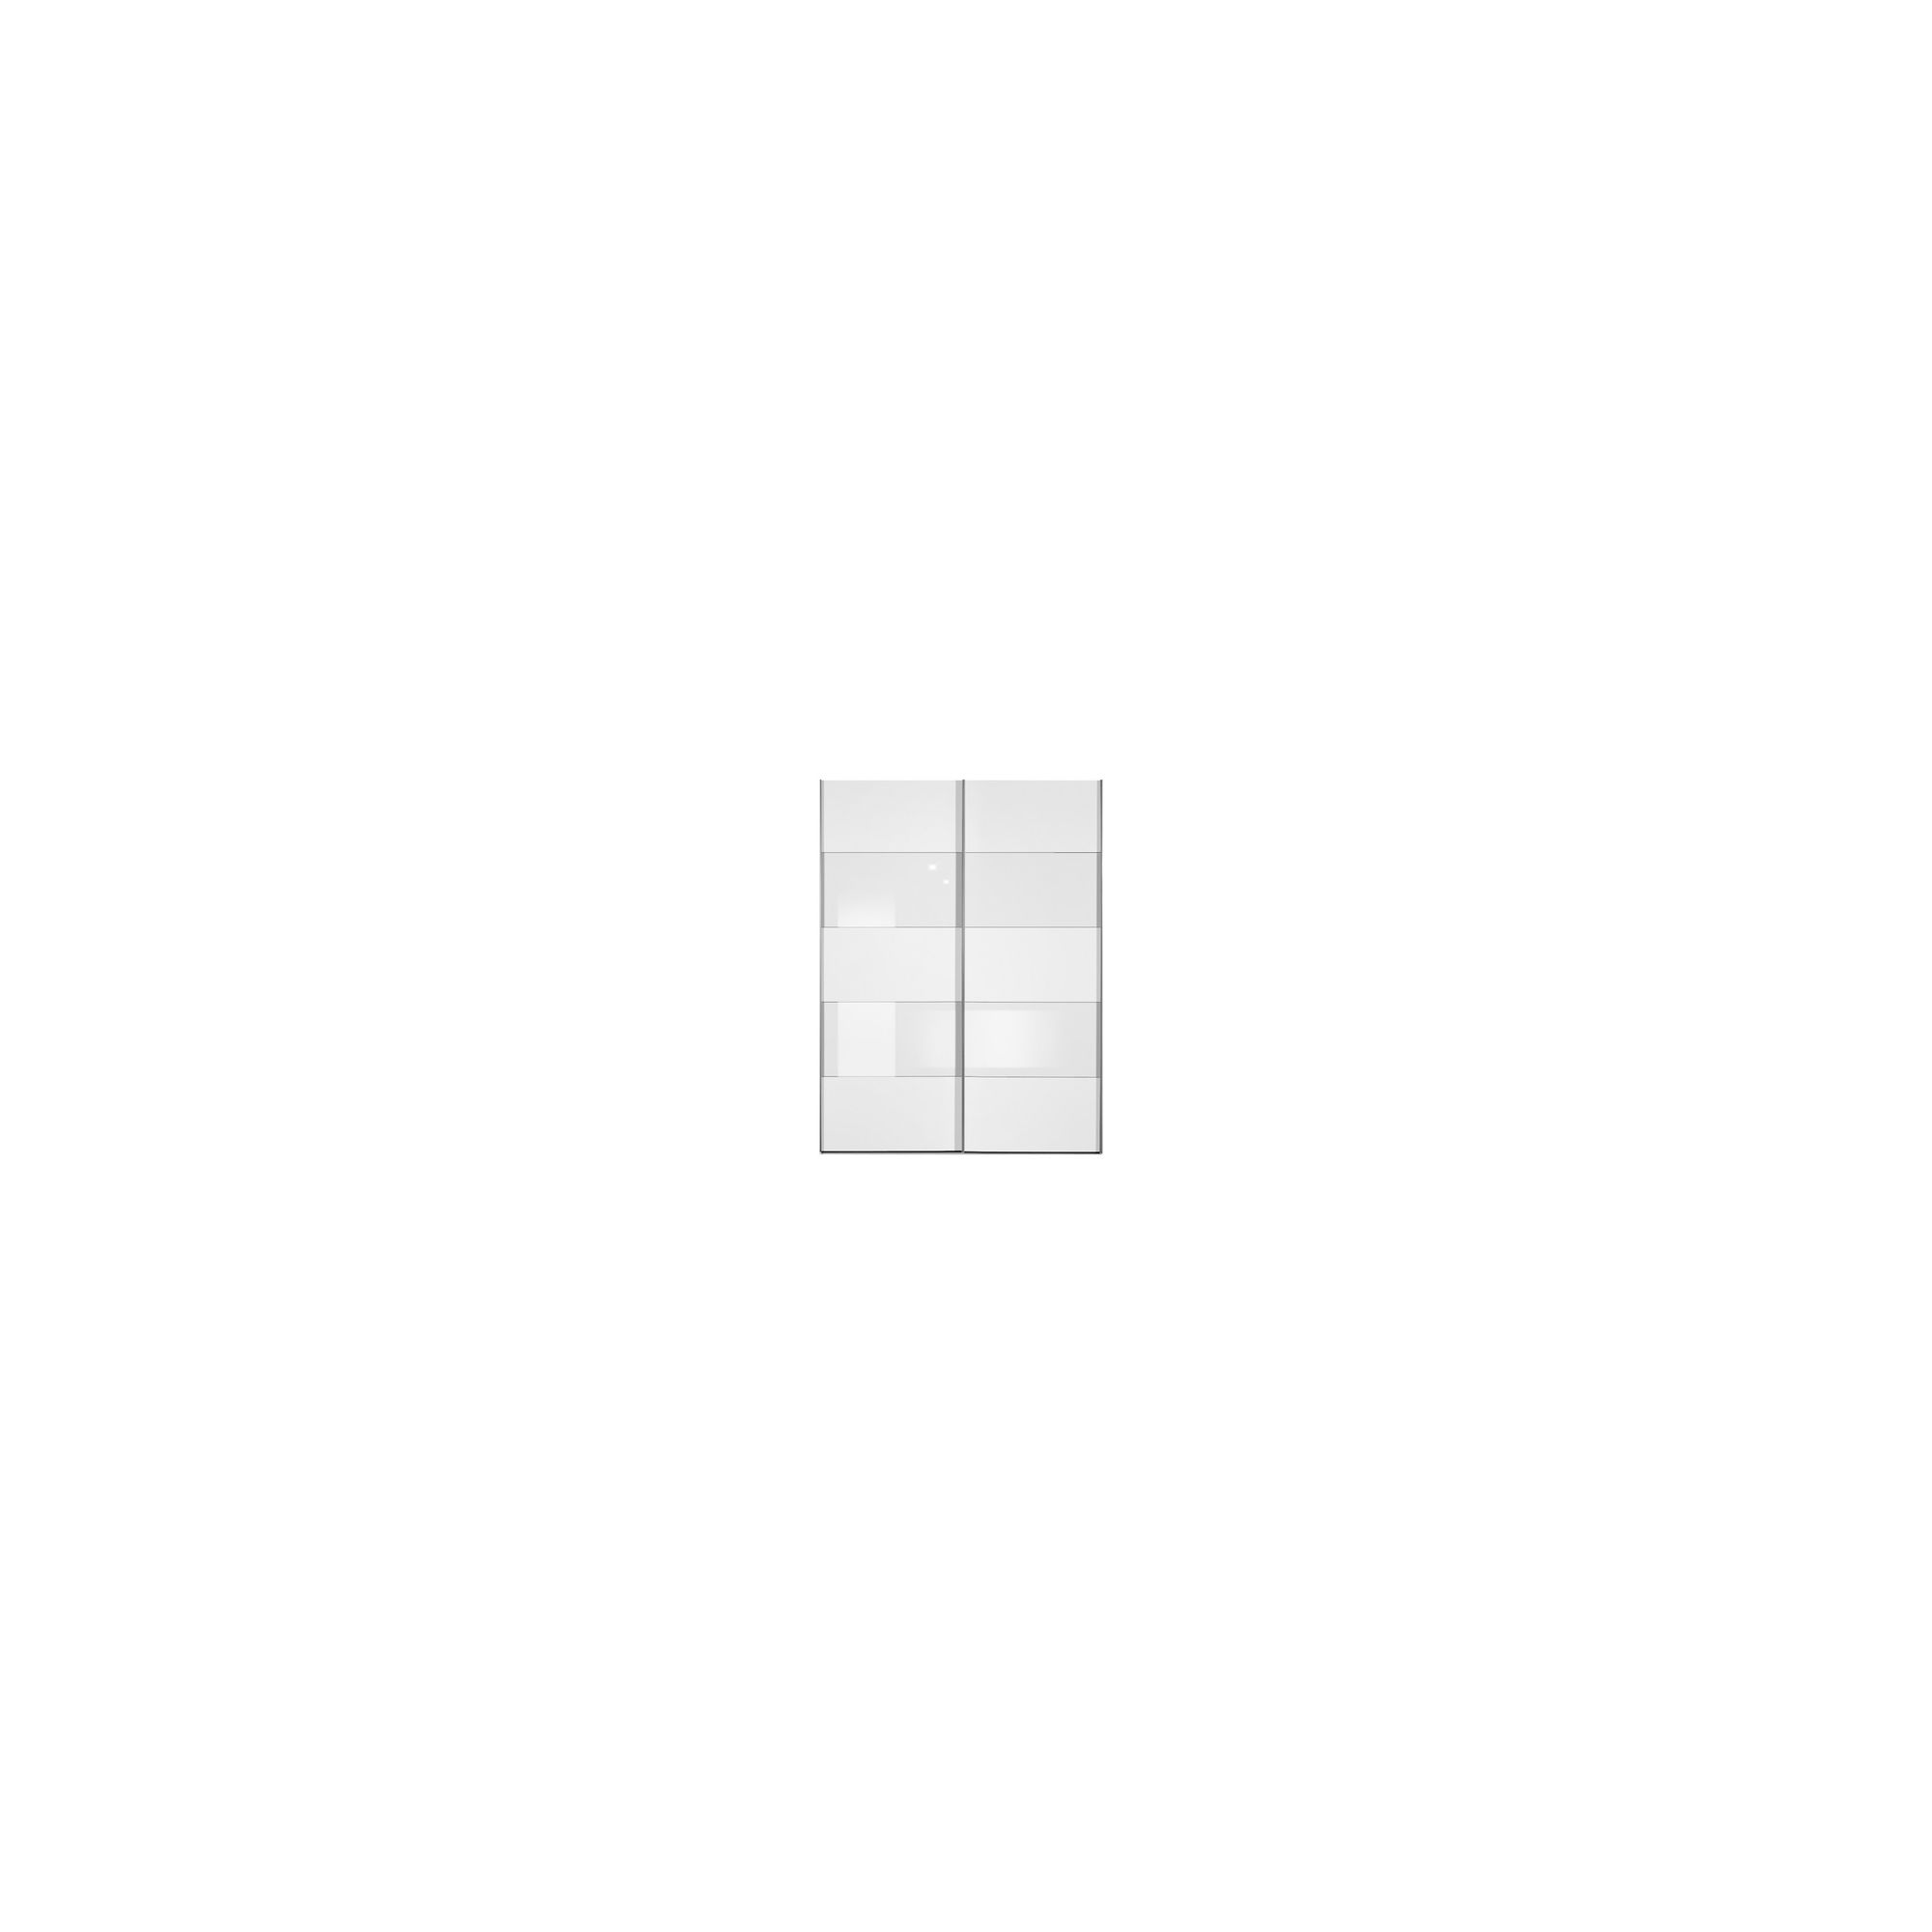 Arte-M Inline Sliding Door Wardrobe with Four Glass Panels - Black / Black at Tesco Direct